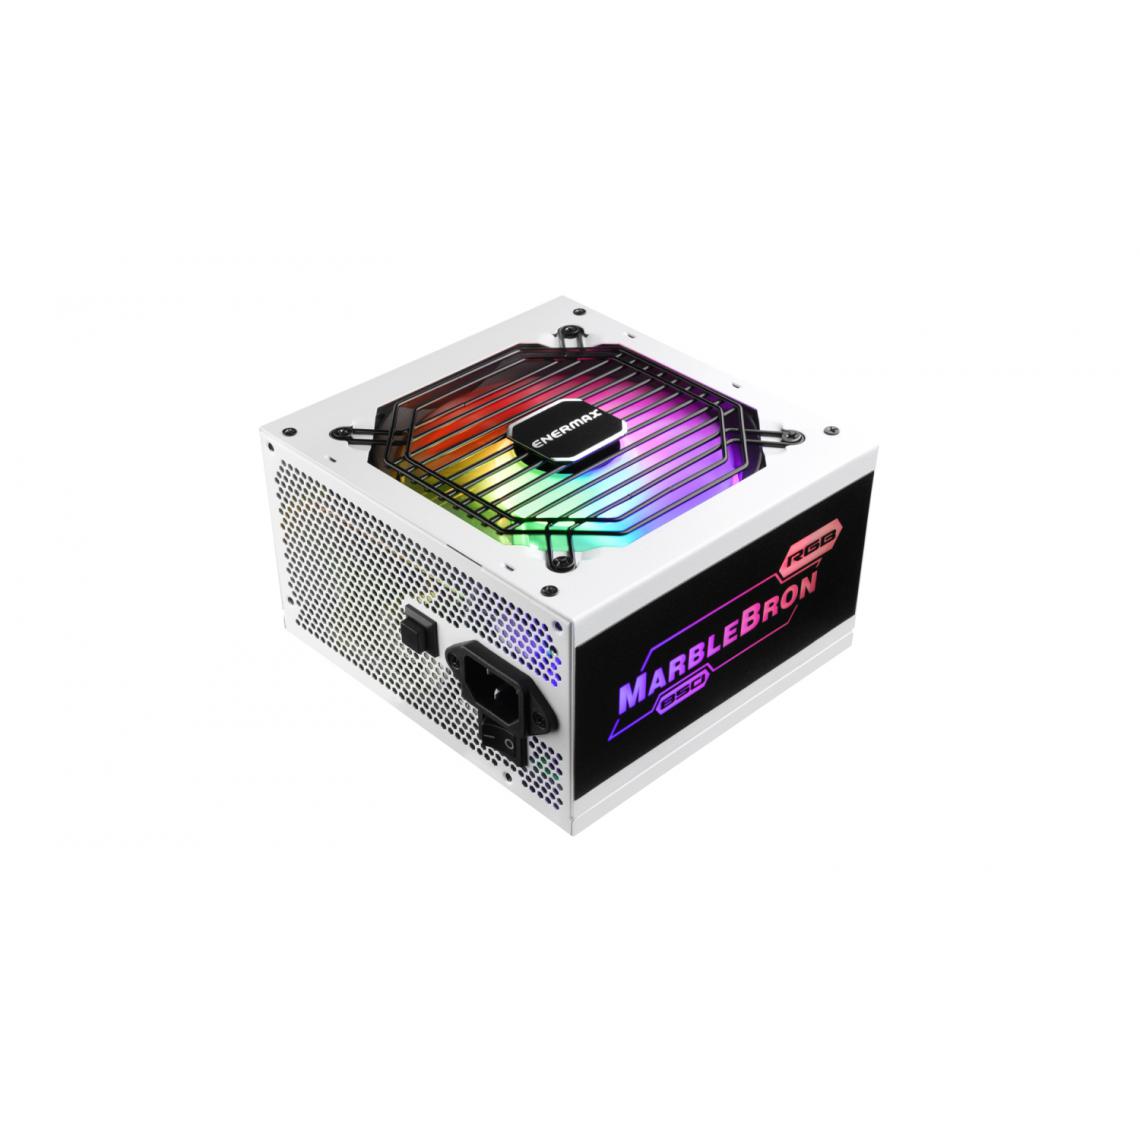 Enermax - Alimentation PC MARBLEBRON ATX - 850W - RGB adressable - Alimentation modulaire